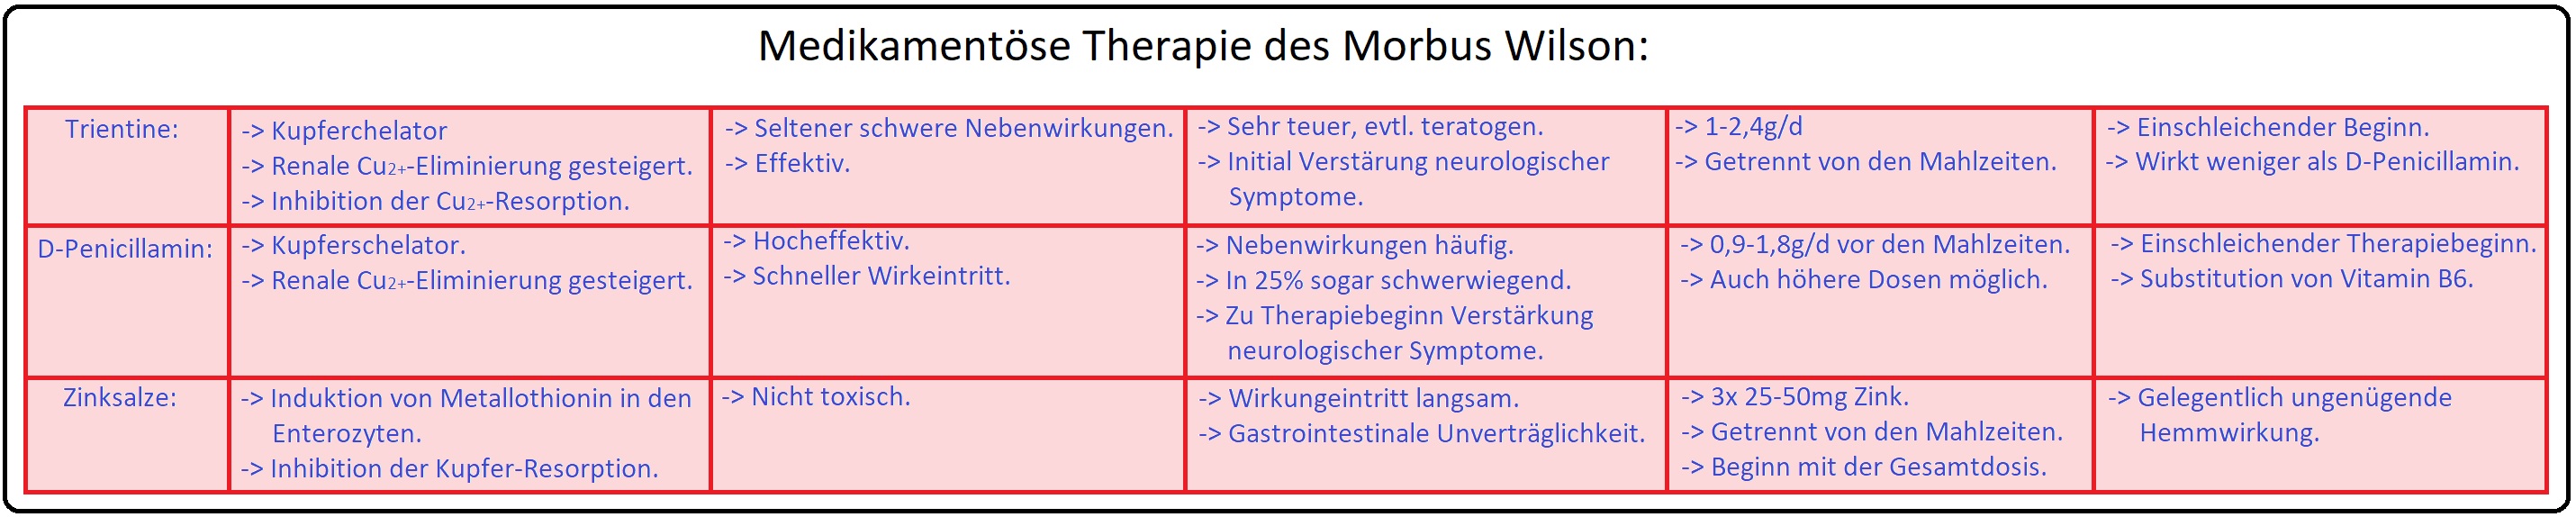 709 Medikamentöse Therapie des Morbus Wilson